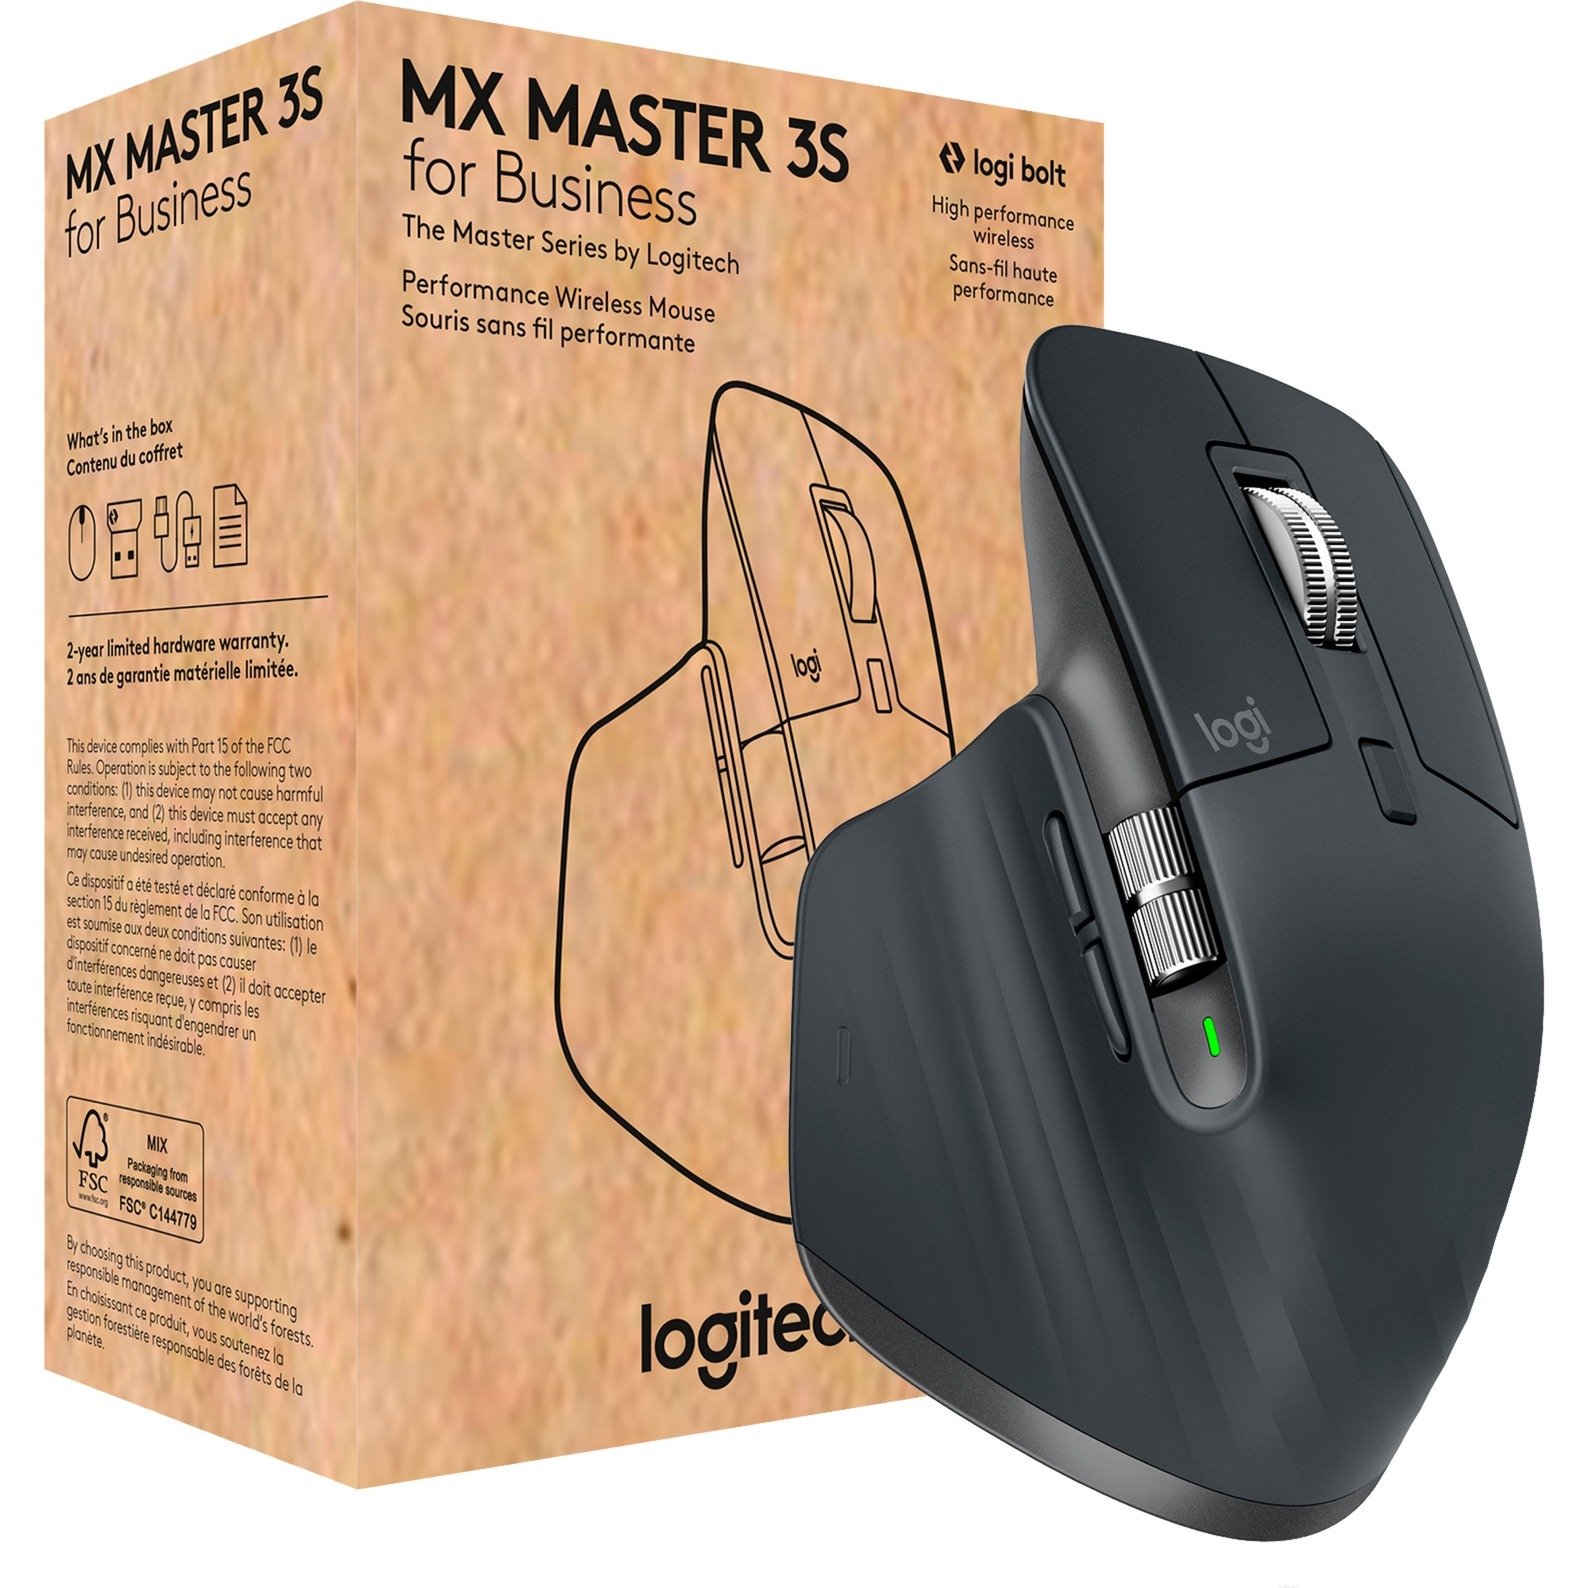 MX Master 3S for Business, Maus von Logitech